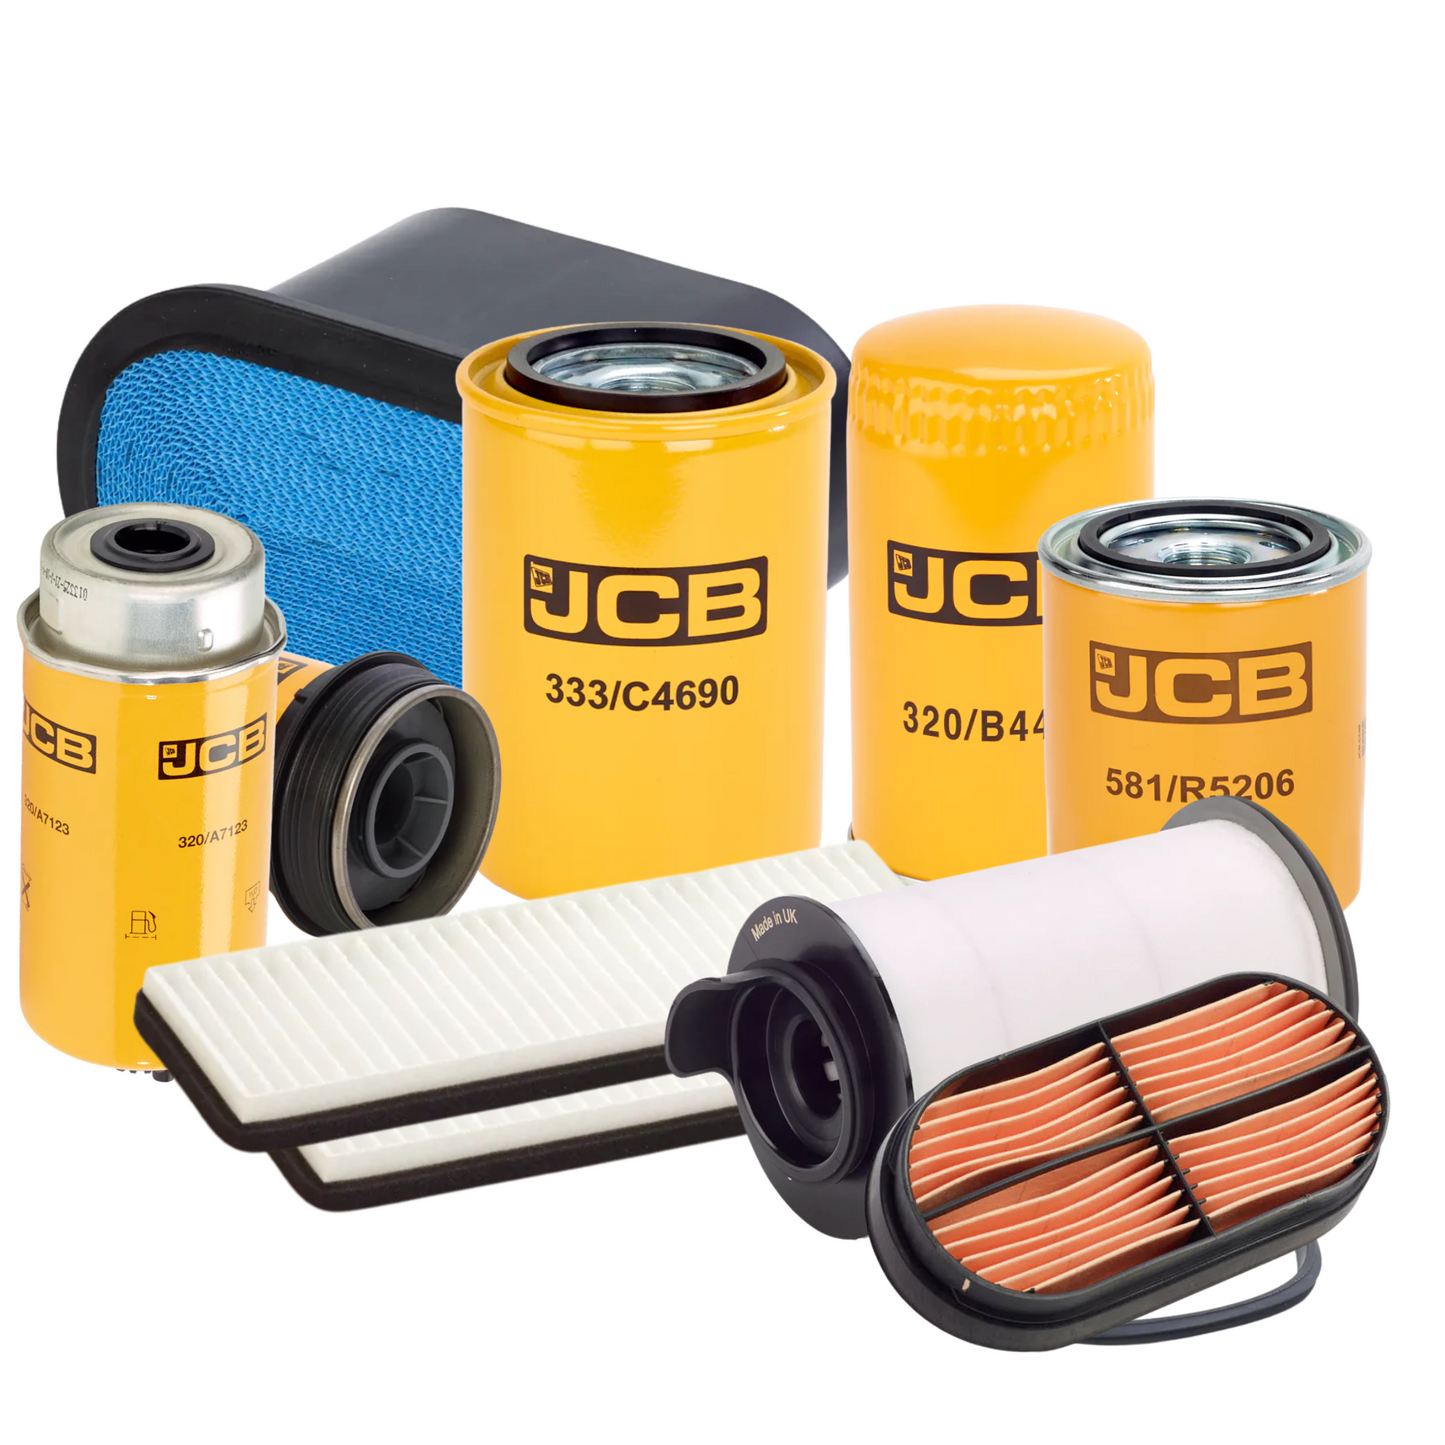 JCB 535-125 8000 Hour Filter Service Kit